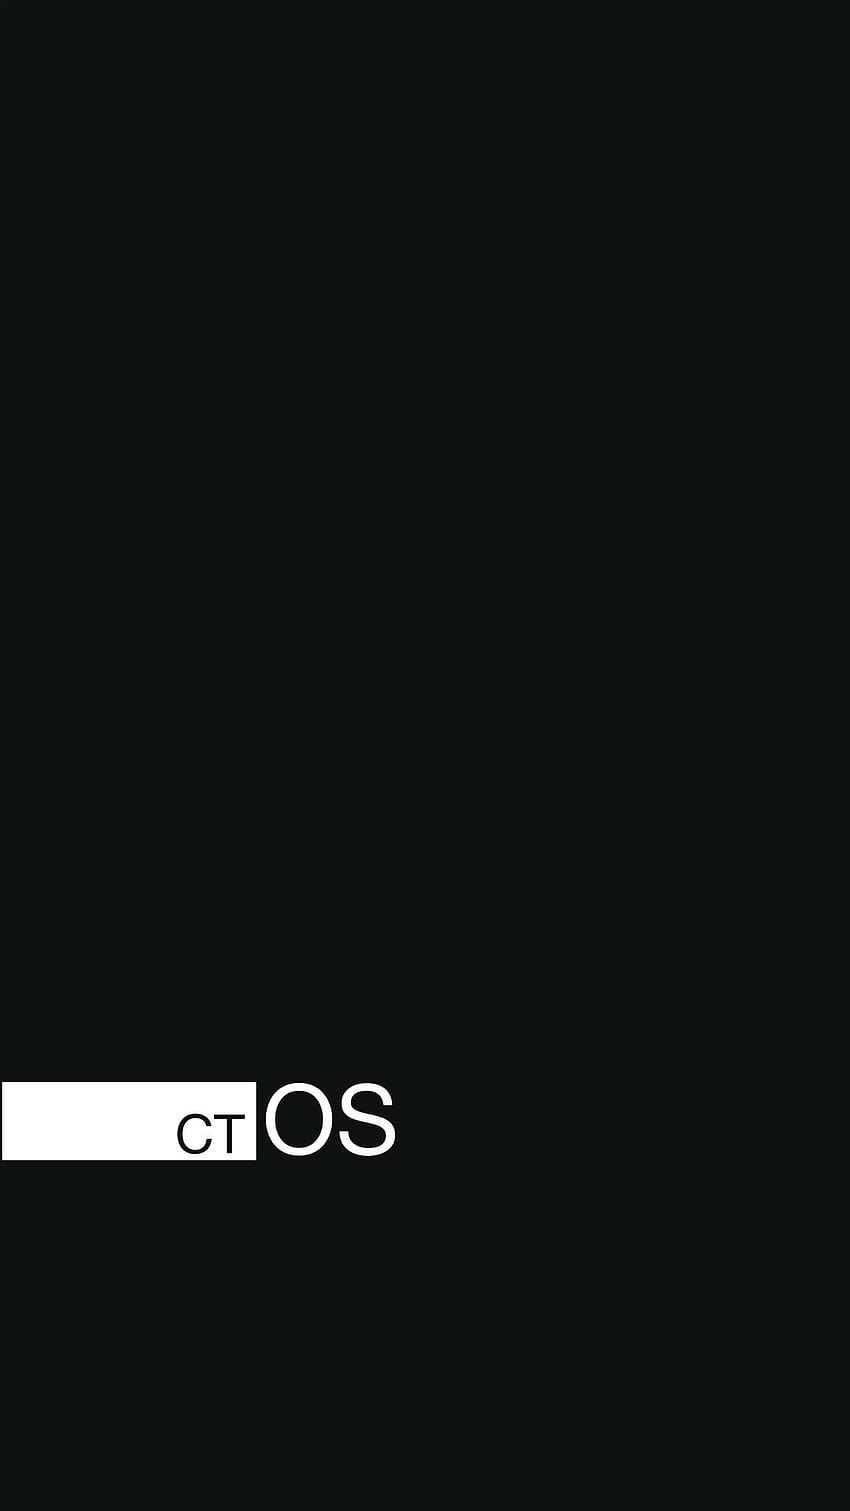 Ctos Logo Full On HD phone wallpaper